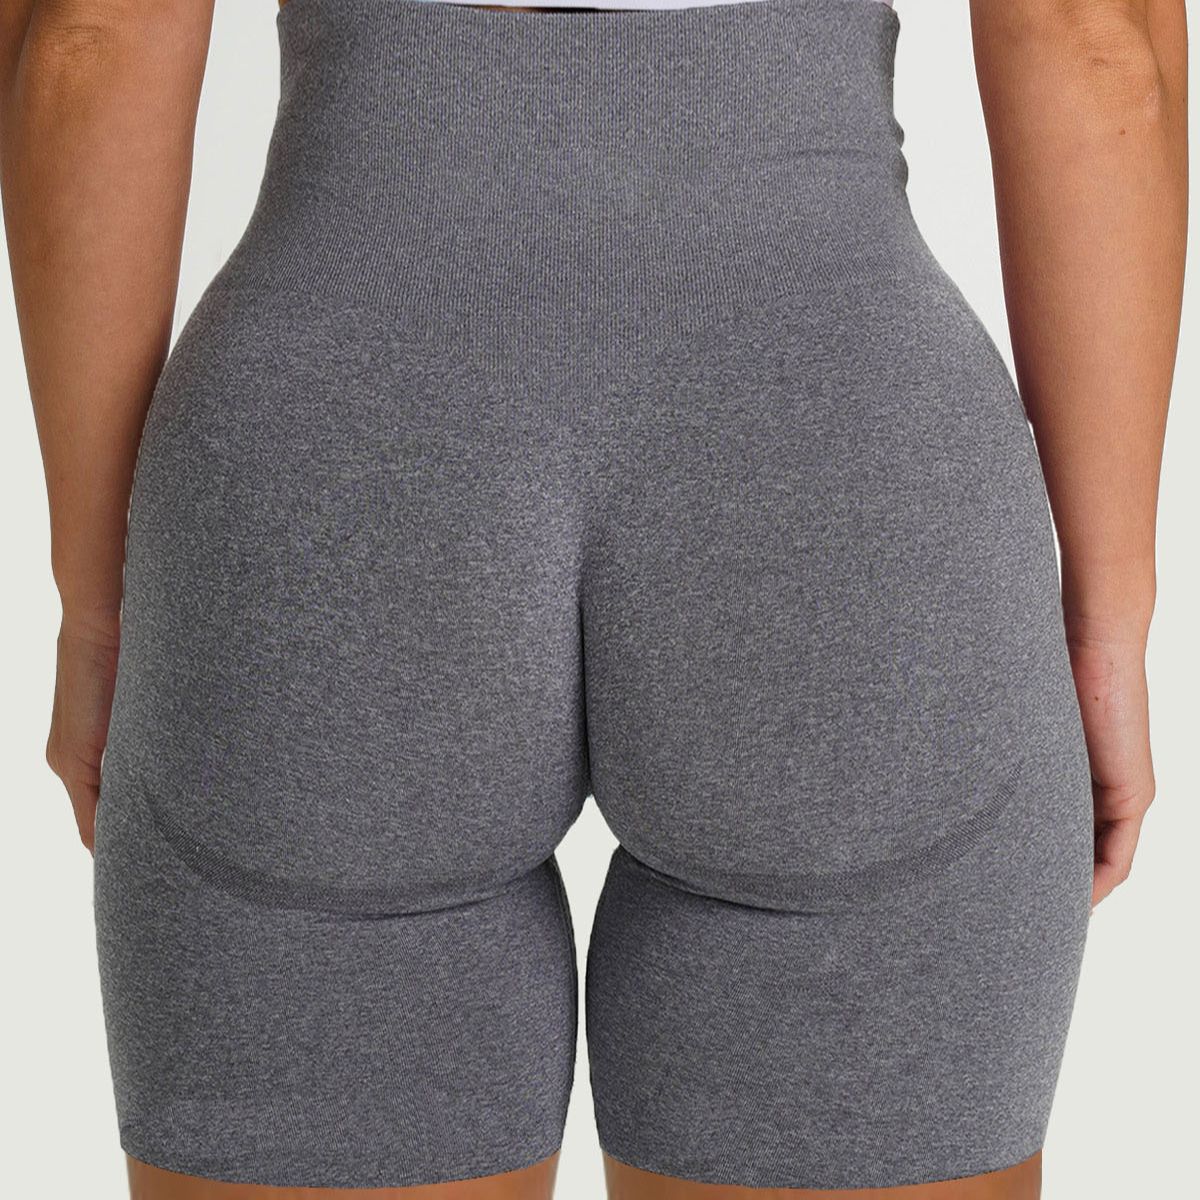 Seamless Leggings Women Sport Slim ShortsTights Fitness High Waist Women Clothing Gym Workout Pants Female Pants Navy Shorts